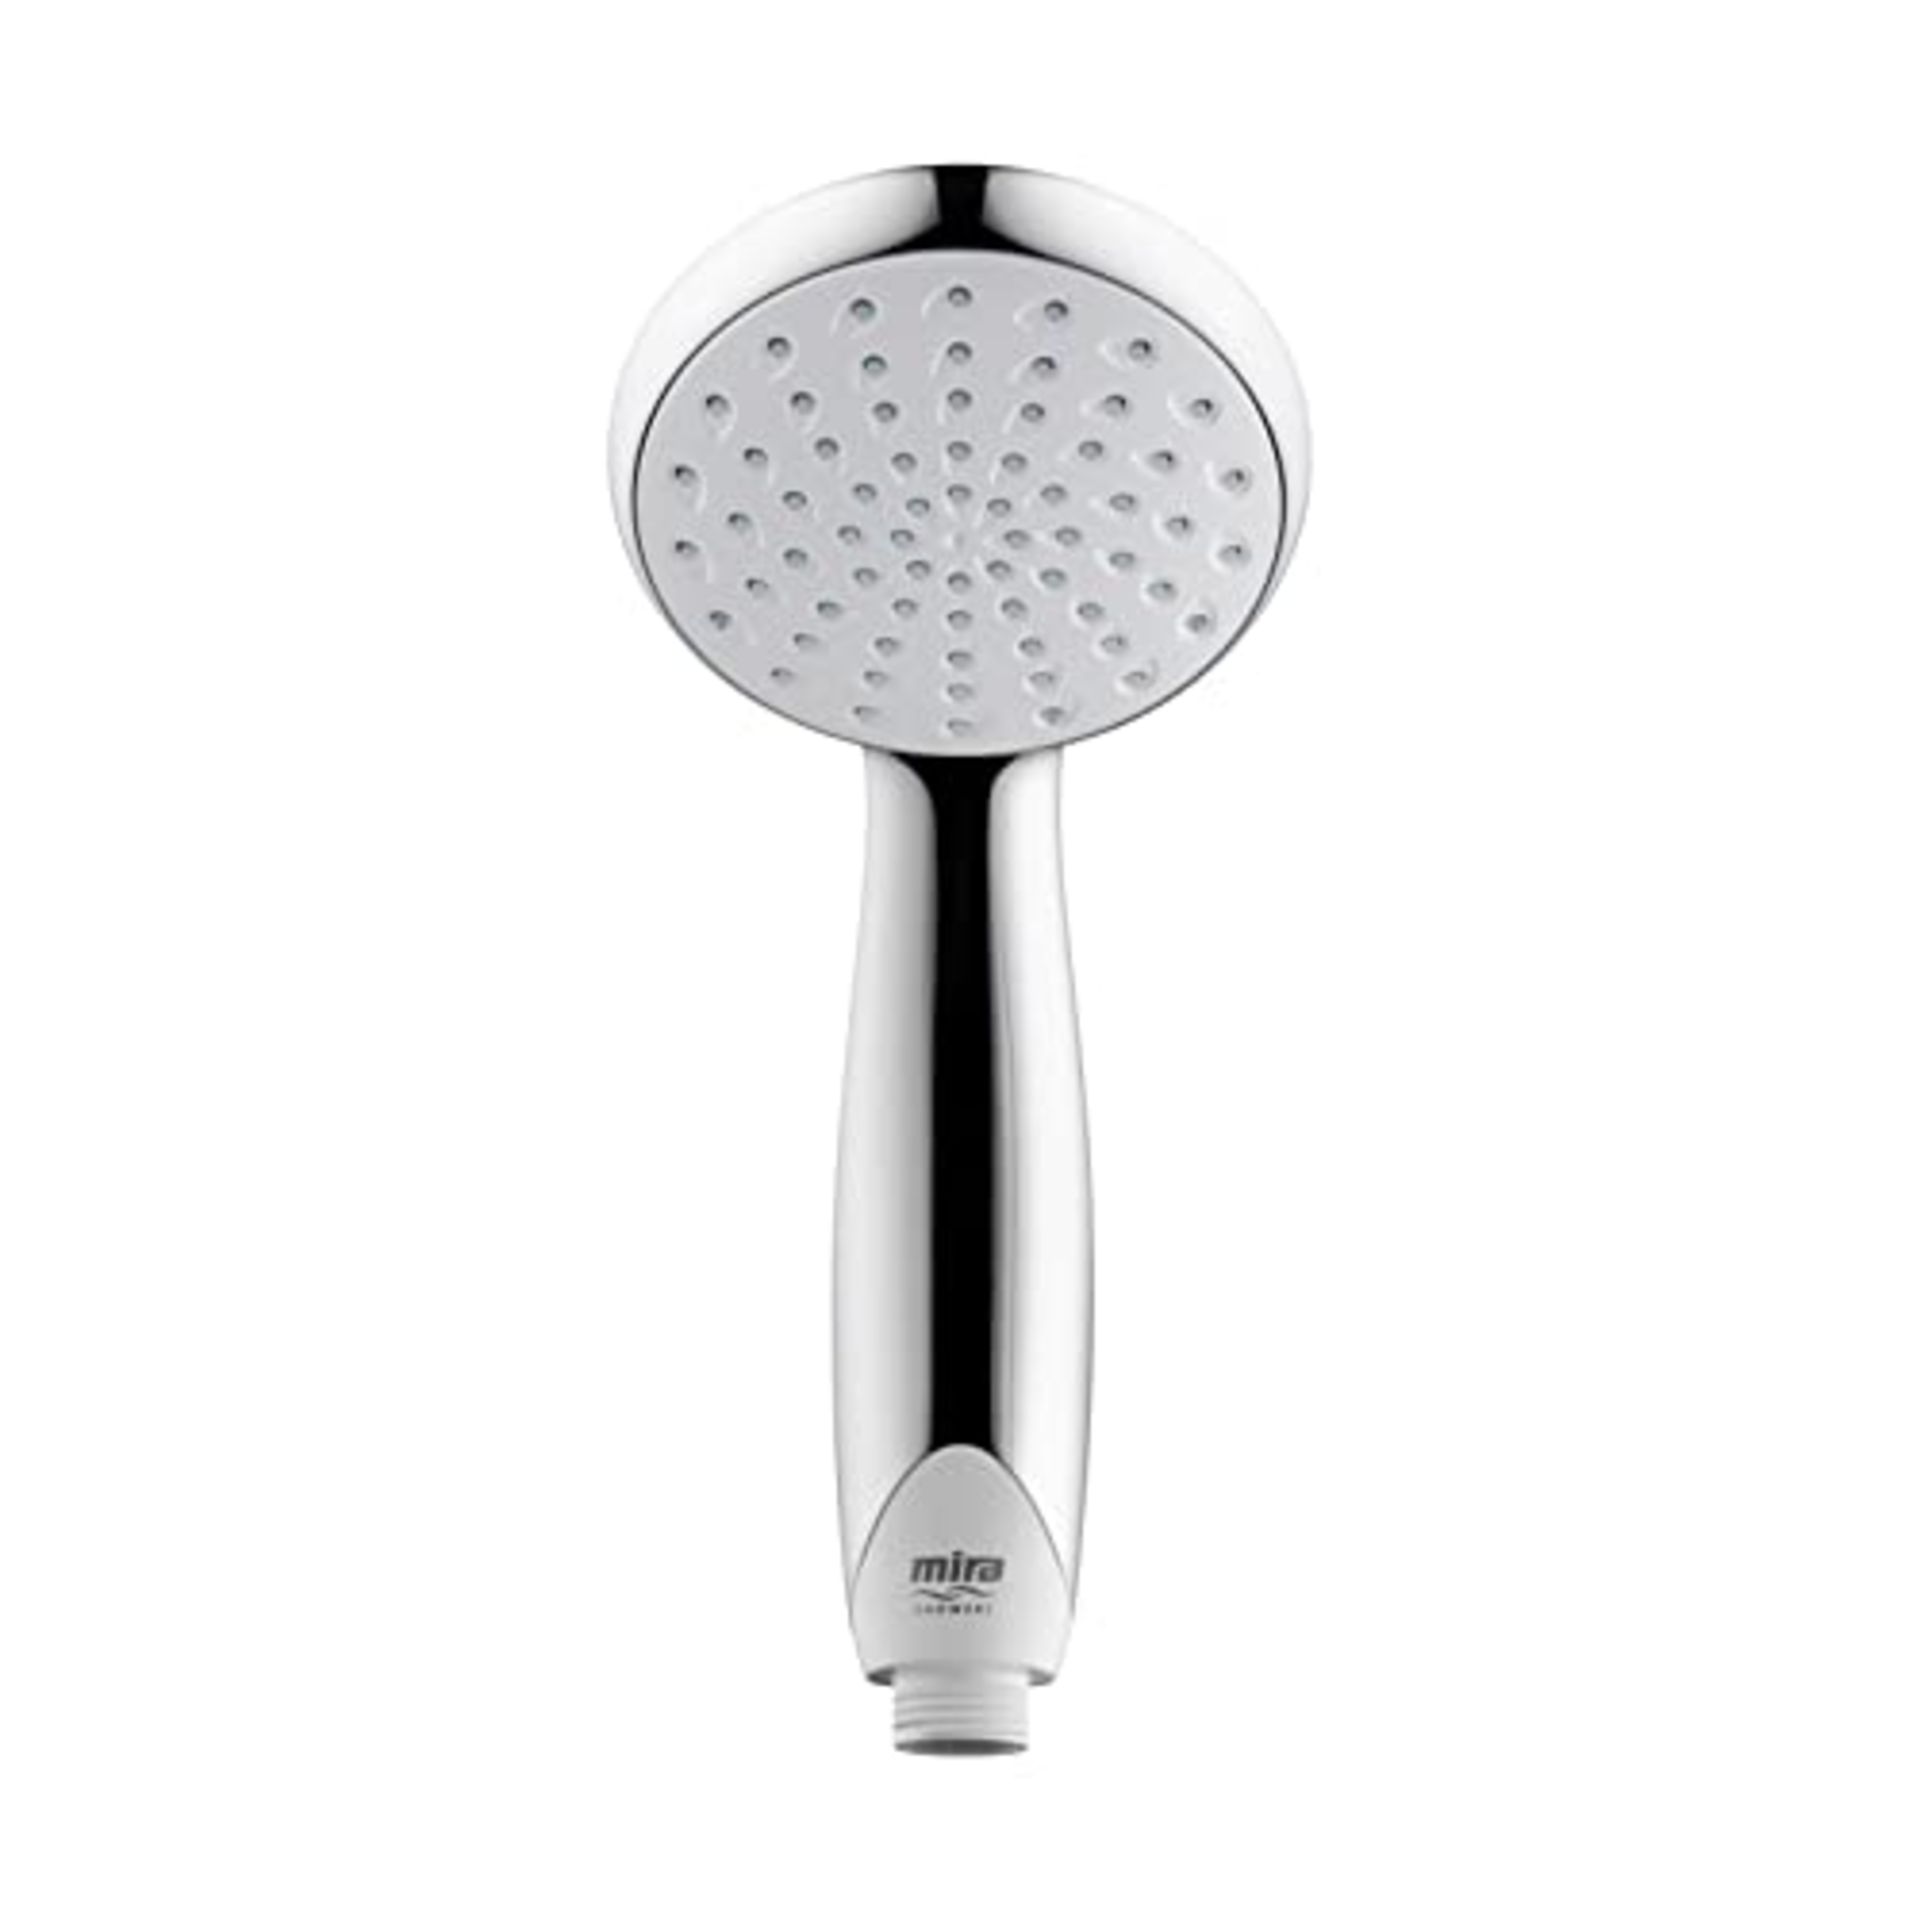 Mira Showers 2.1703.003 Nectar 9 cm Single Spray Shower Head - Chrome